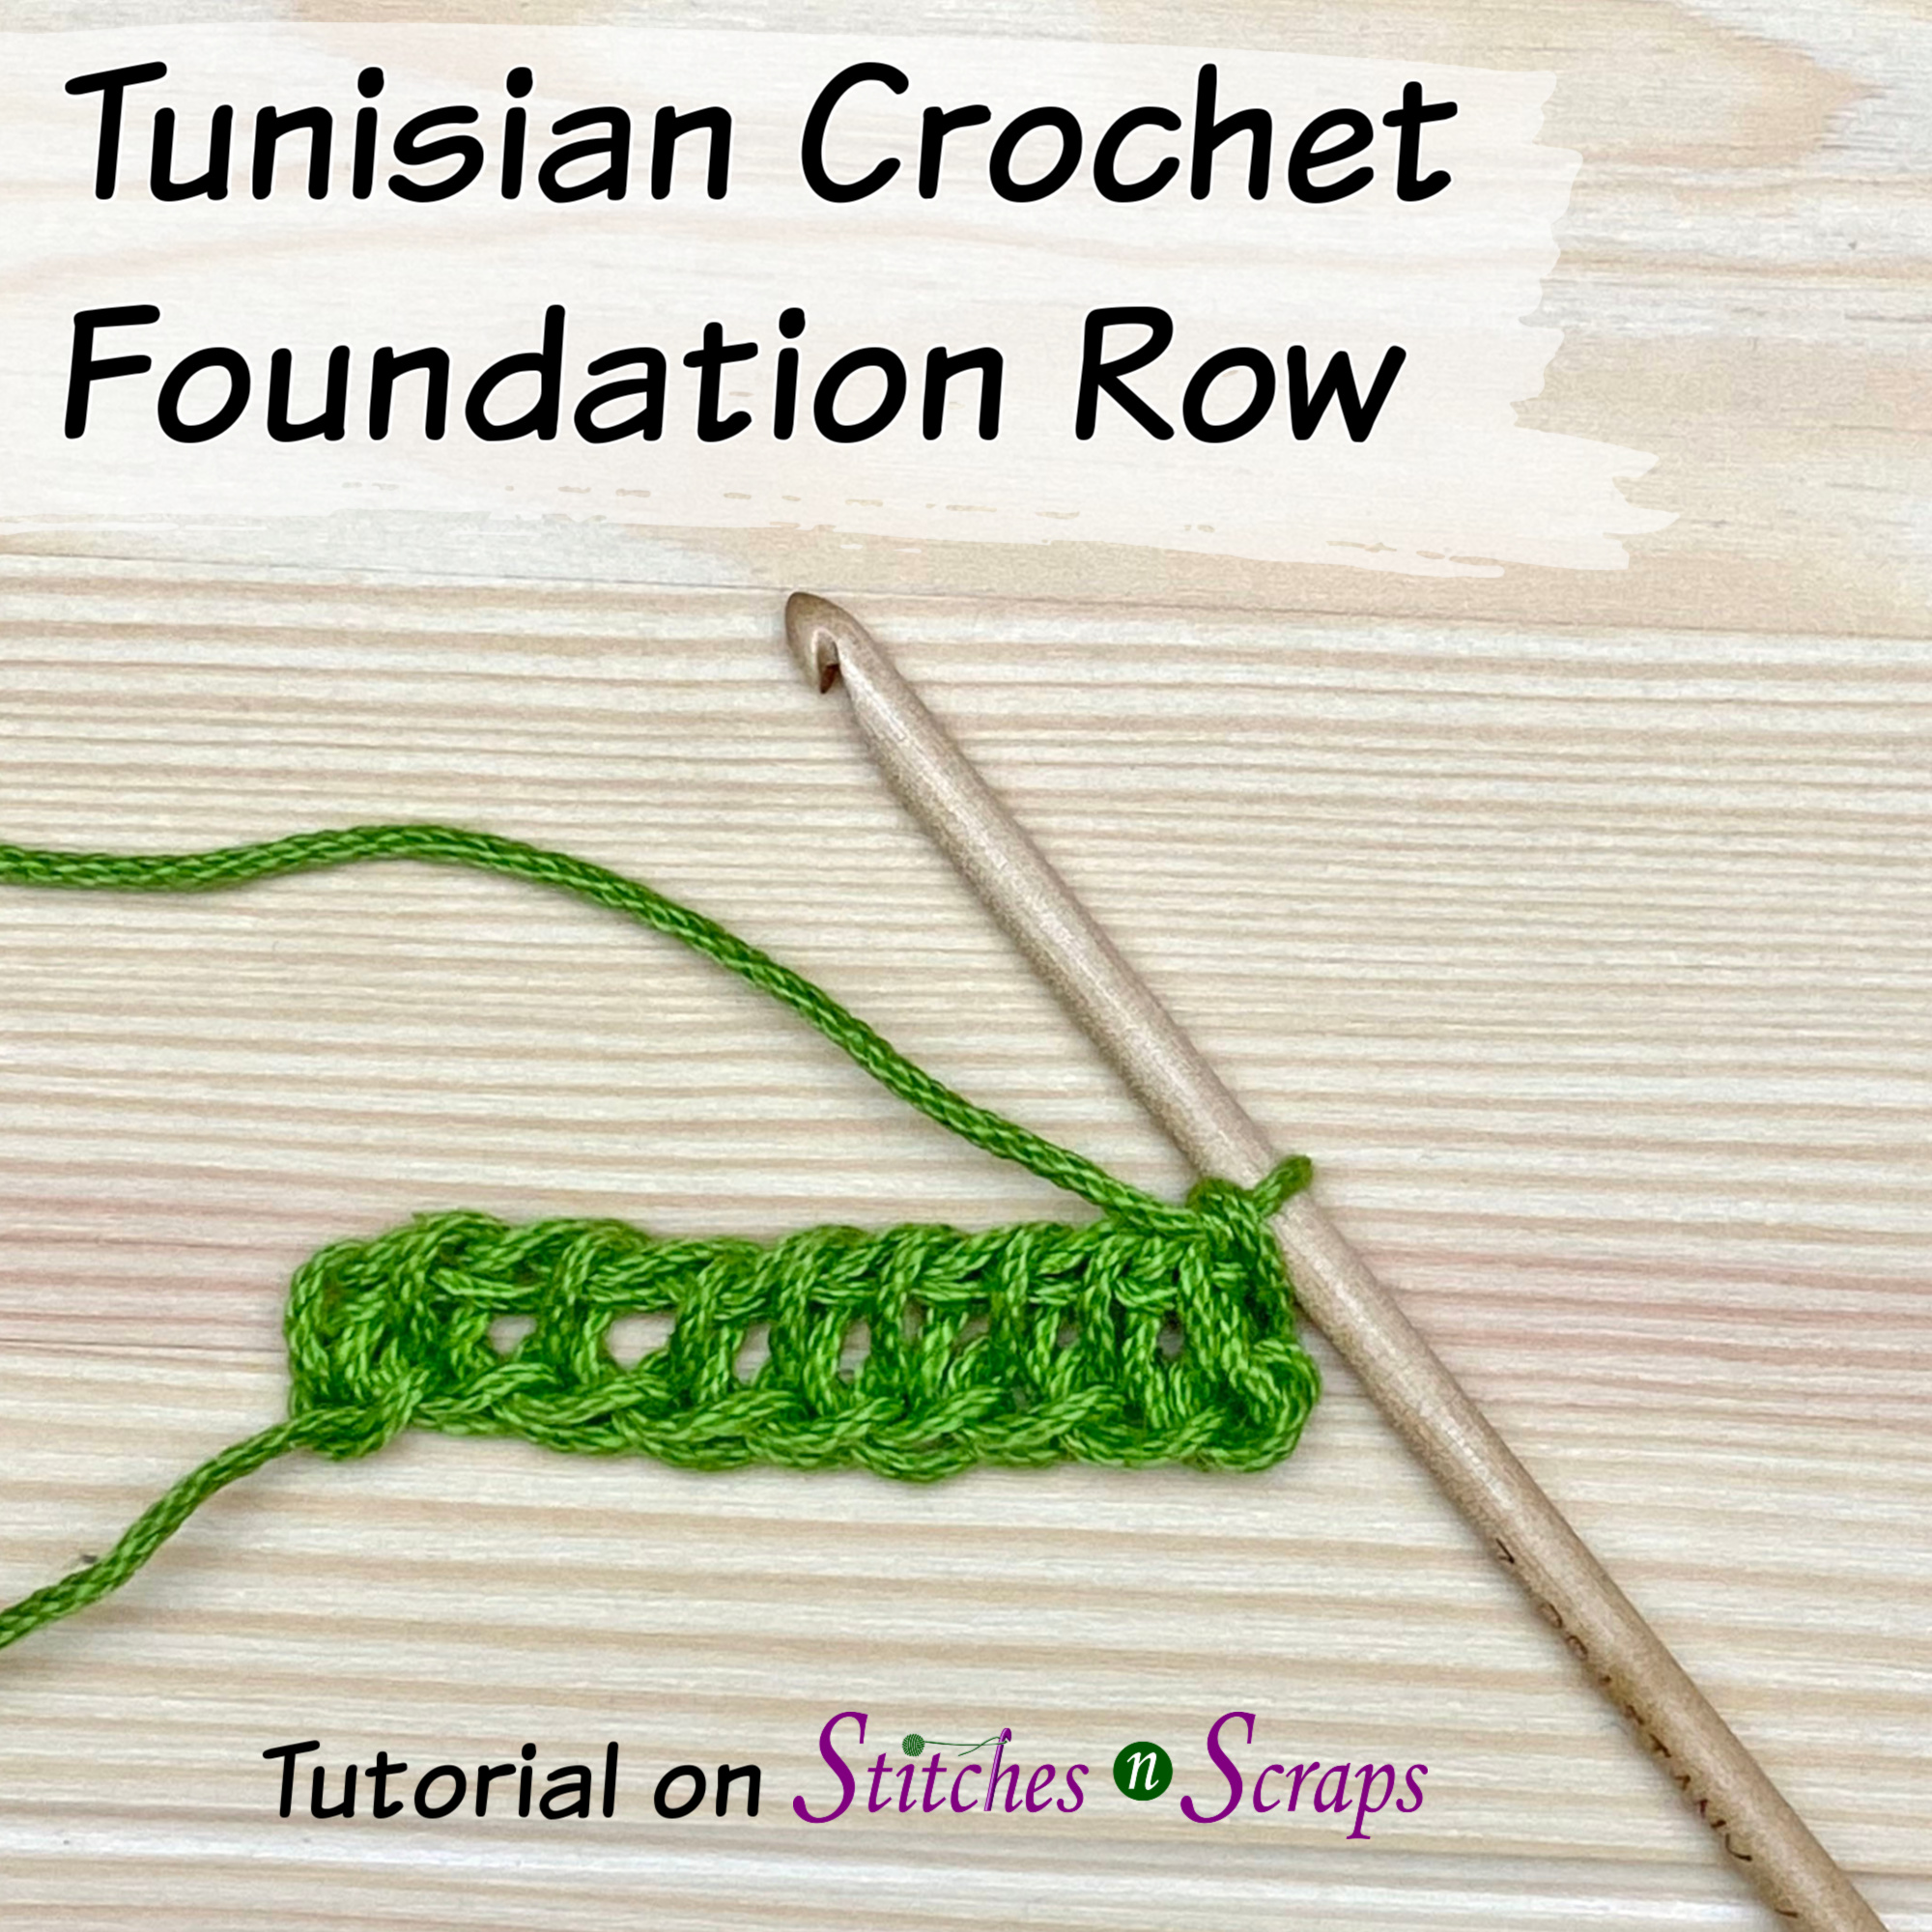 Tunisian Crochet Foundation Row tutorial